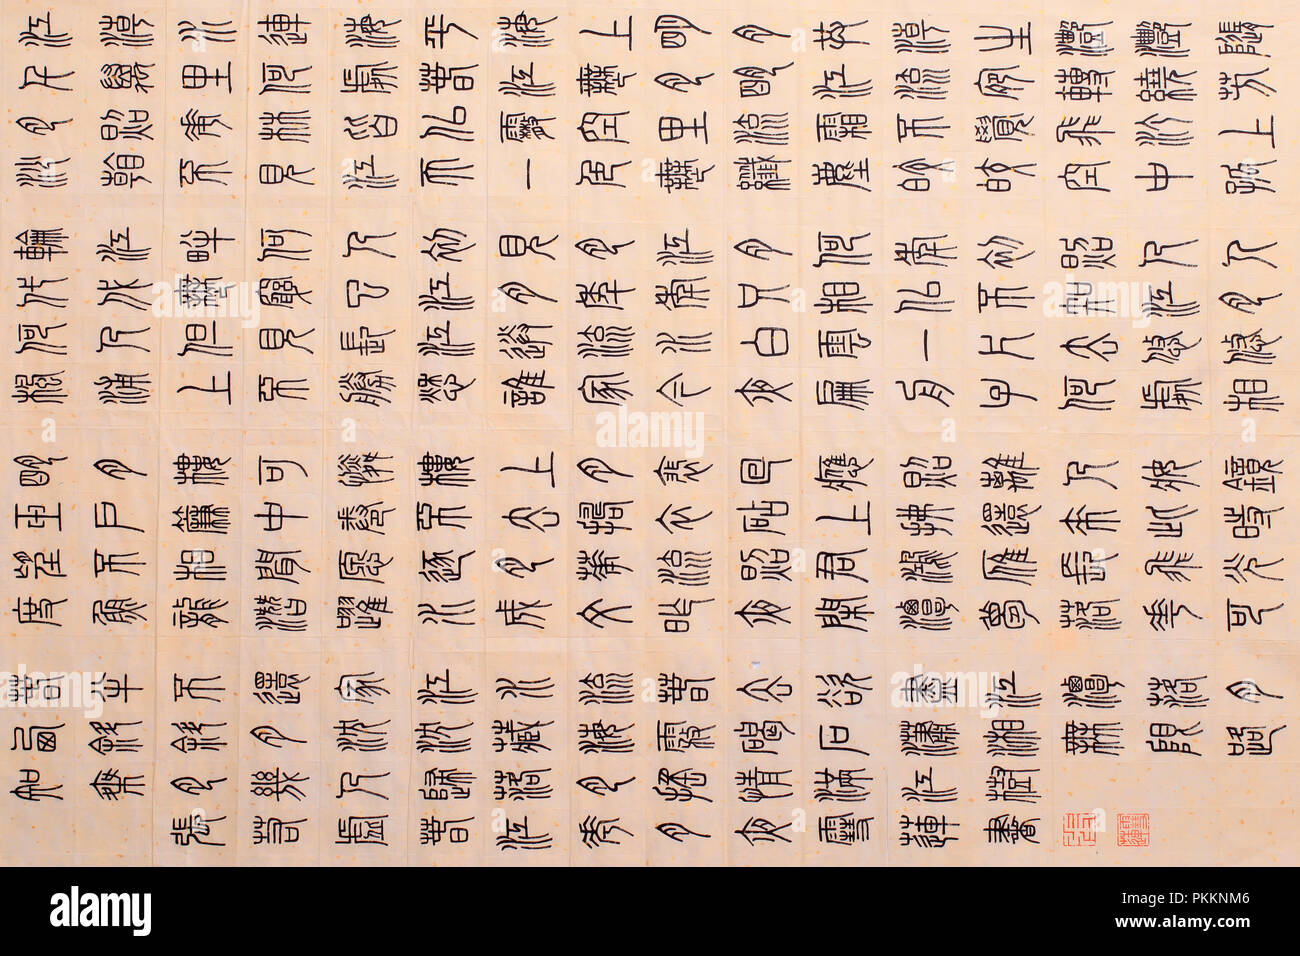 Chinese calligraphy and writing brush, close-up Stock Photo